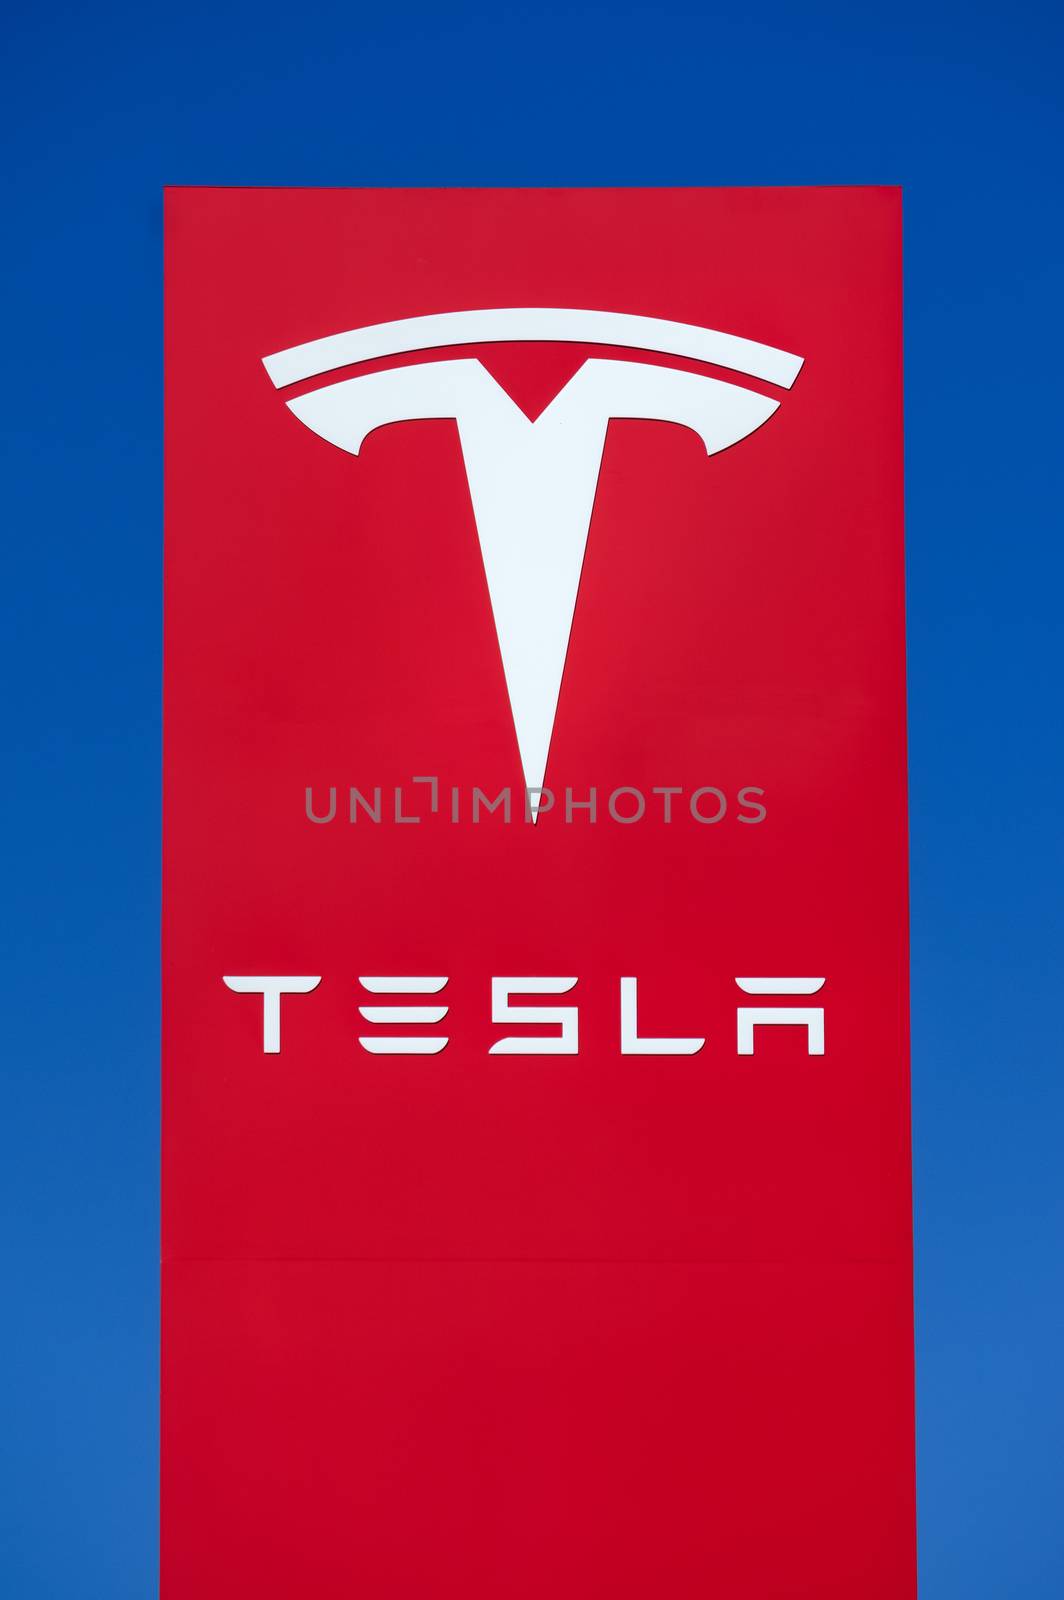 Tesla Motors Automobile Dealership by wolterk